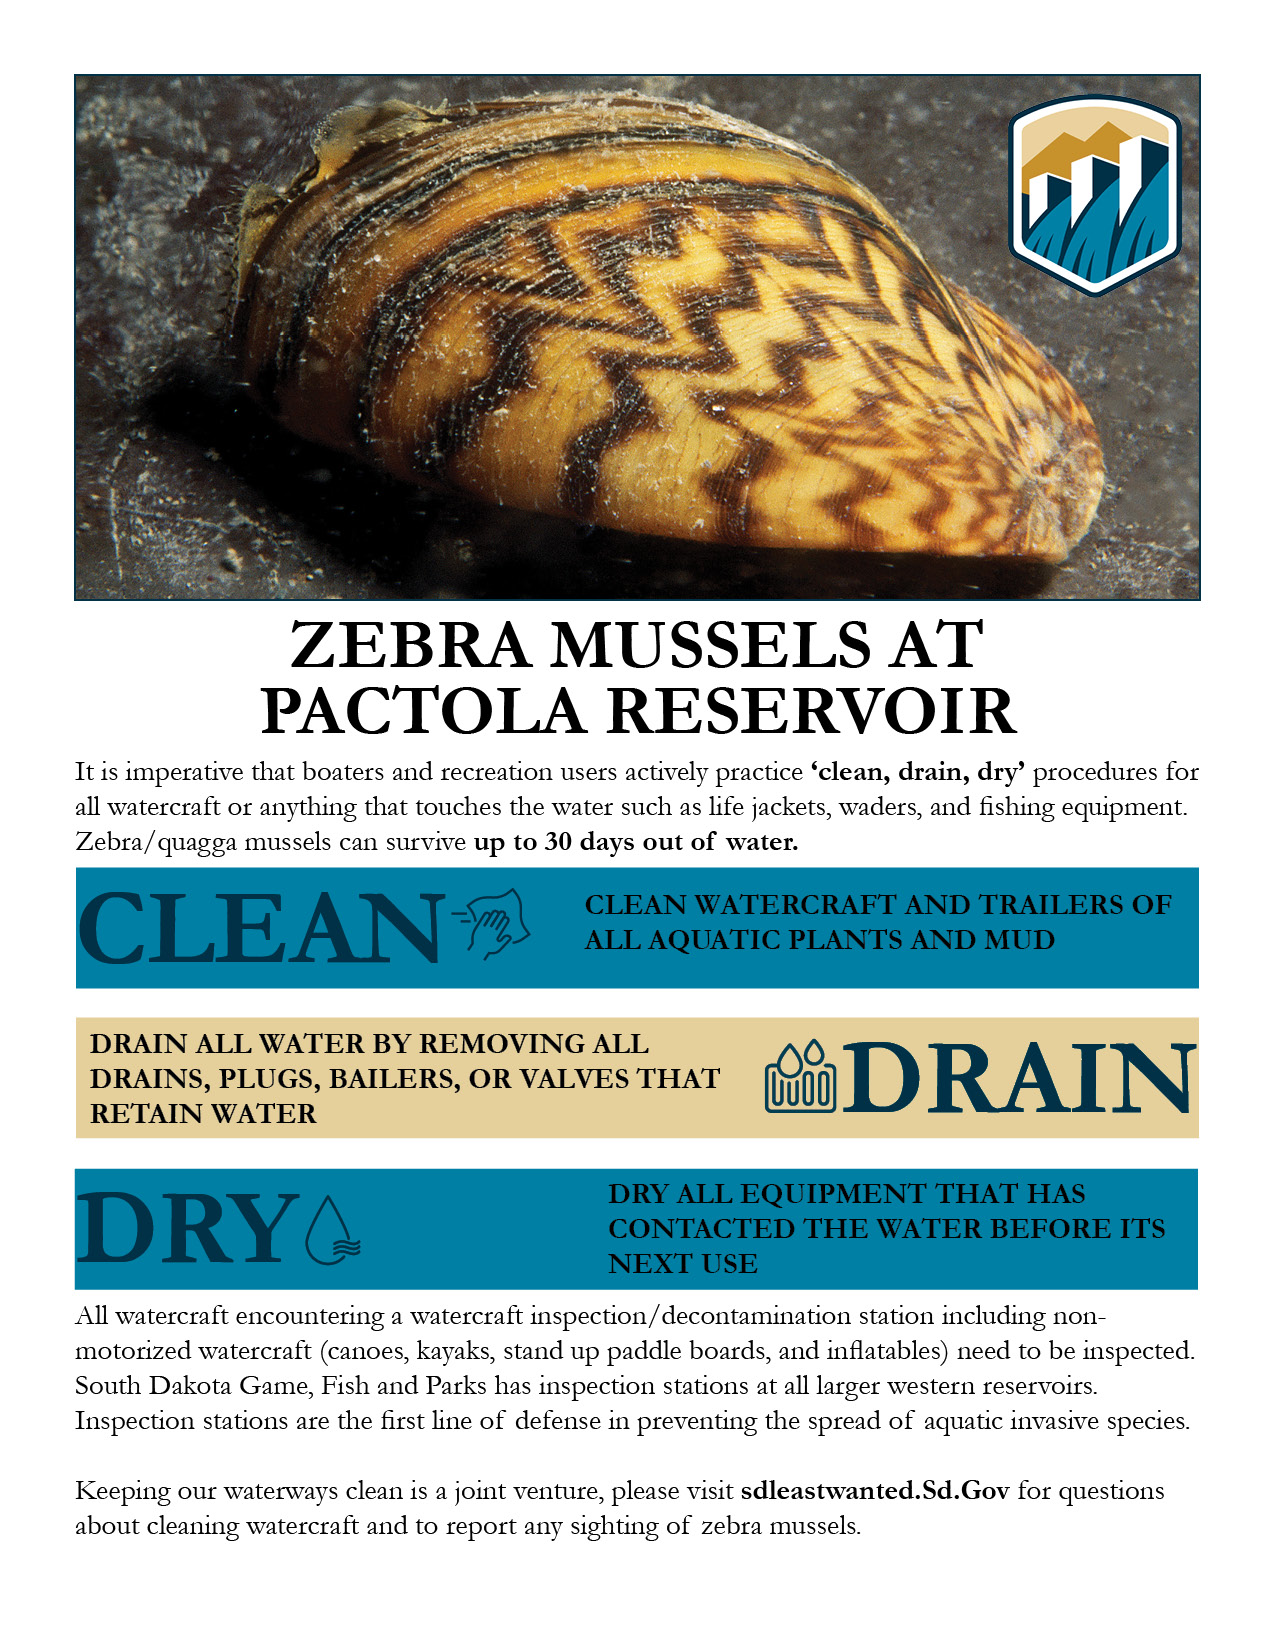 Public Service Announcement Zebra Mussels